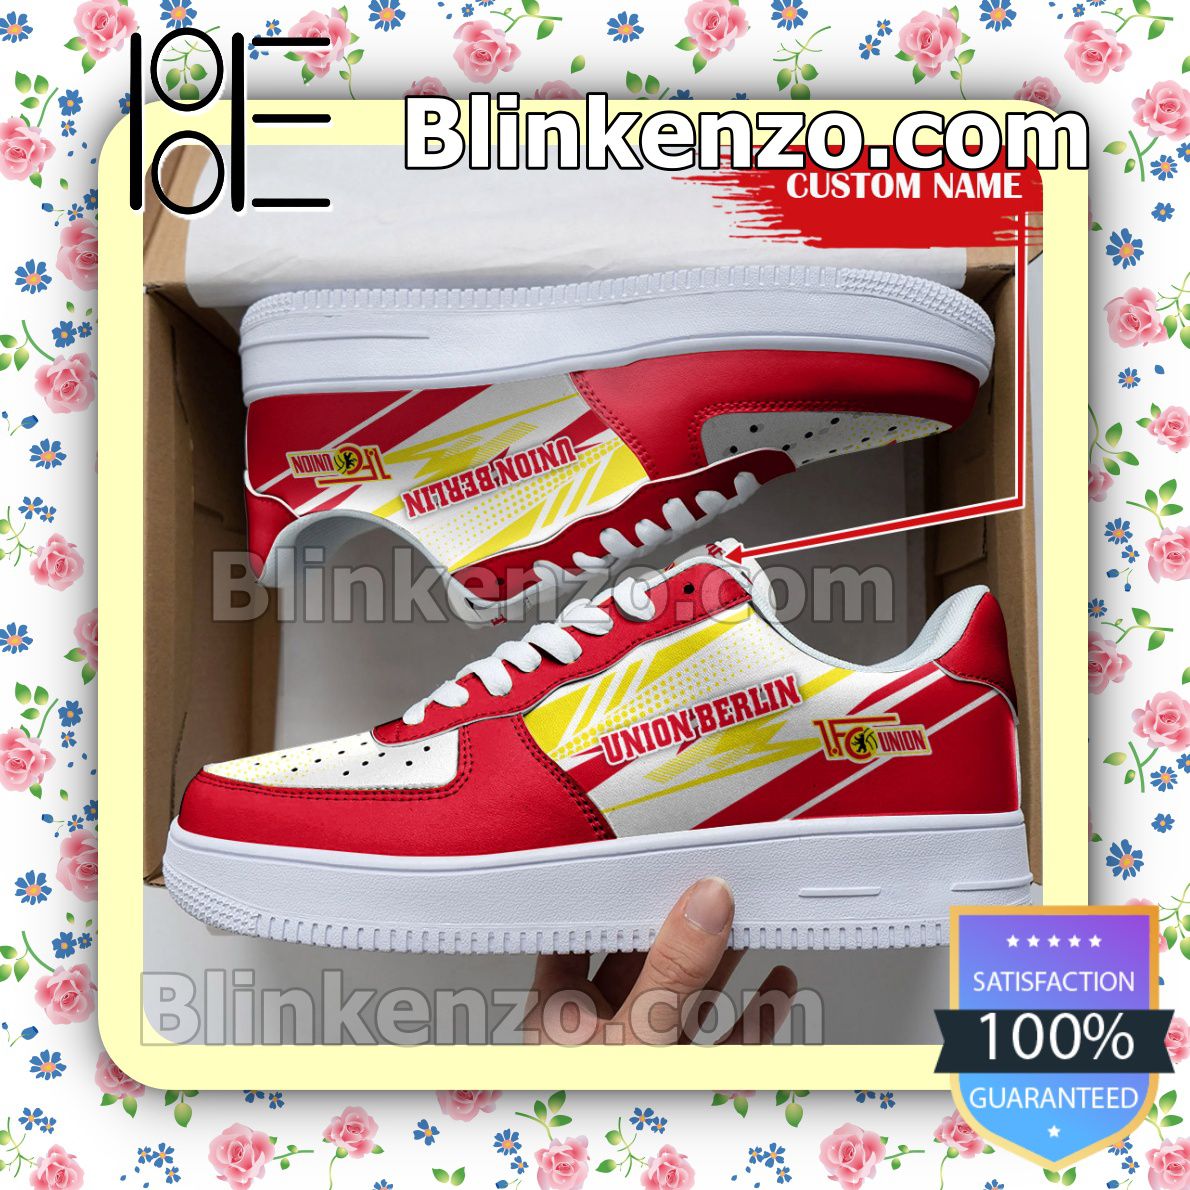 kleding stof Donker worden alias Personalized Bundesliga Union Berlin Custom Name Nike Air Force Sneakers -  Blinkenzo